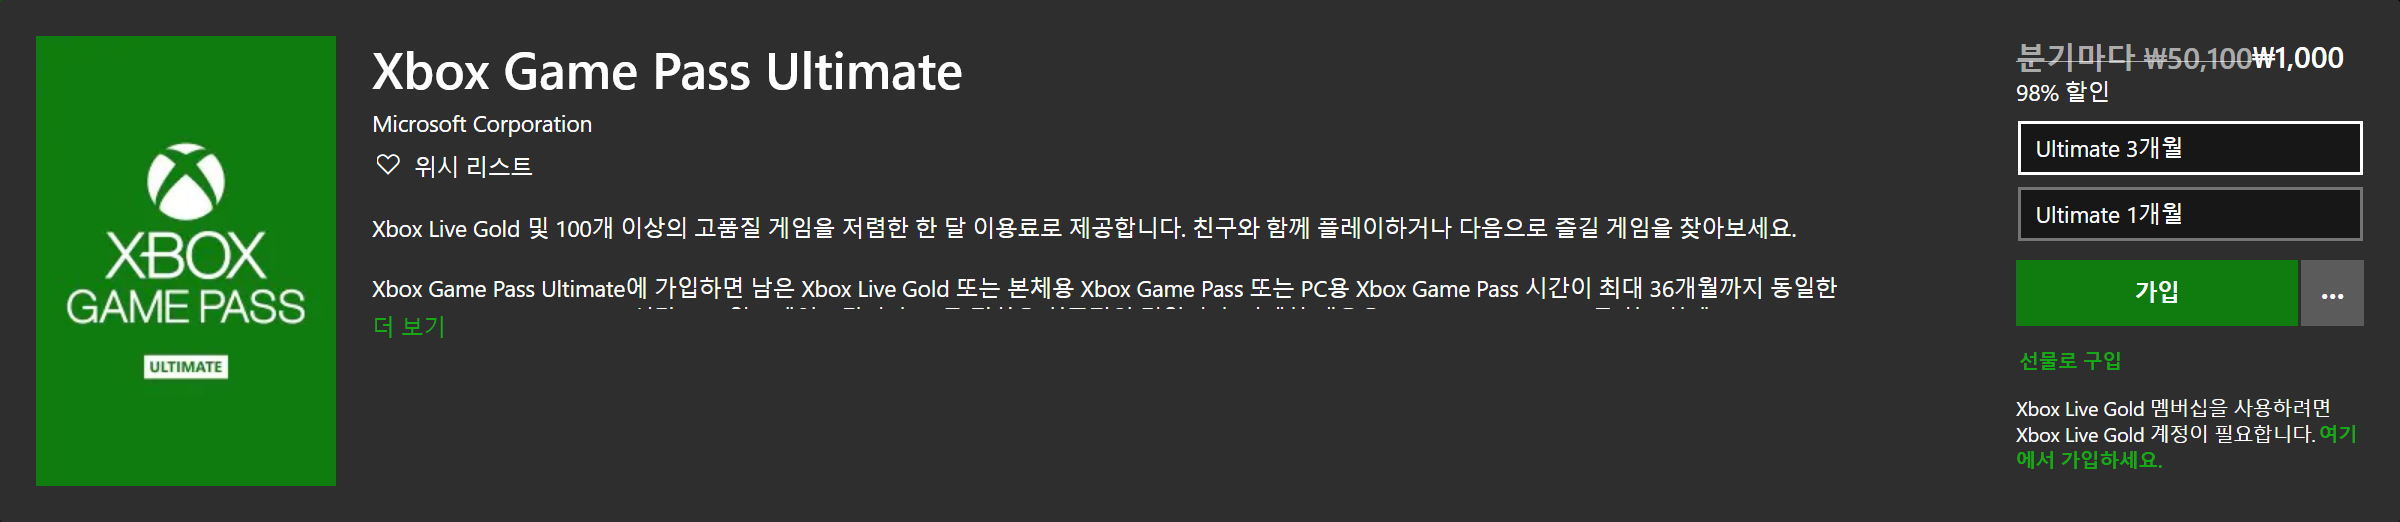 Screenshot_2019-11-14 Xbox Game Pass Ultimate 구매 - Microsoft Store ko-KR.png